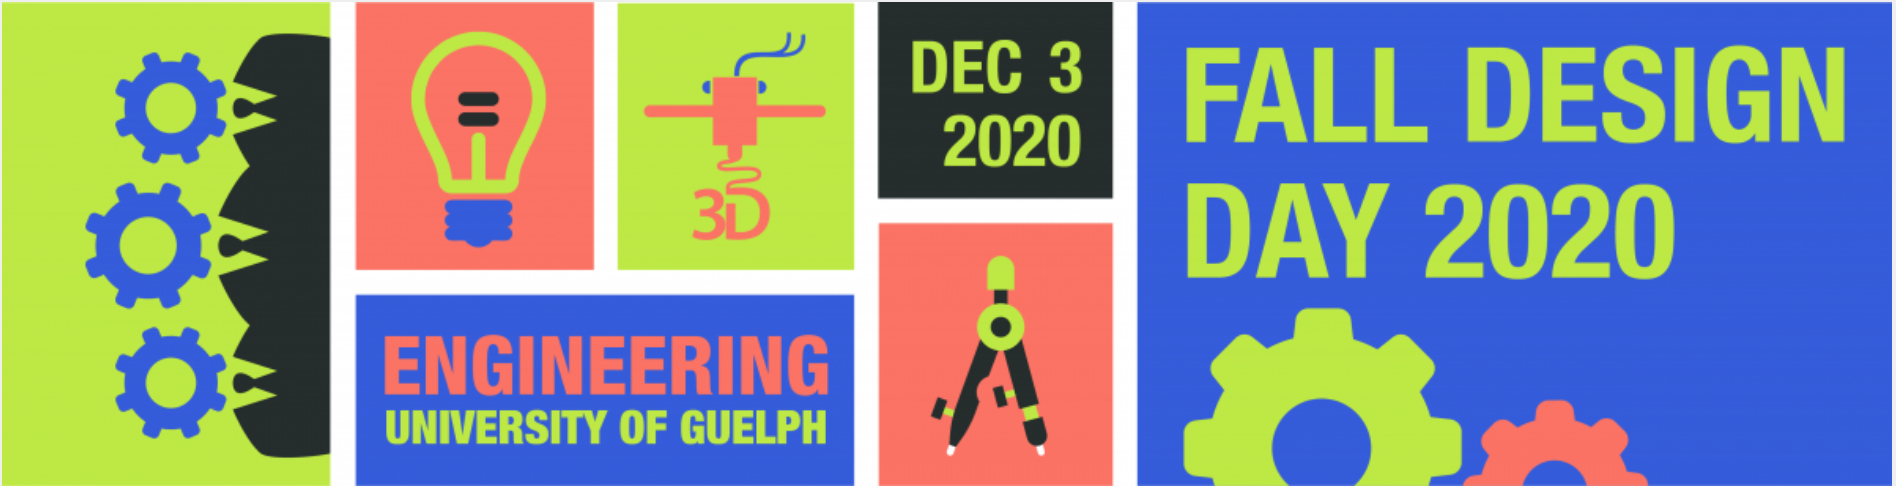 Design Day 2020 Event Banner